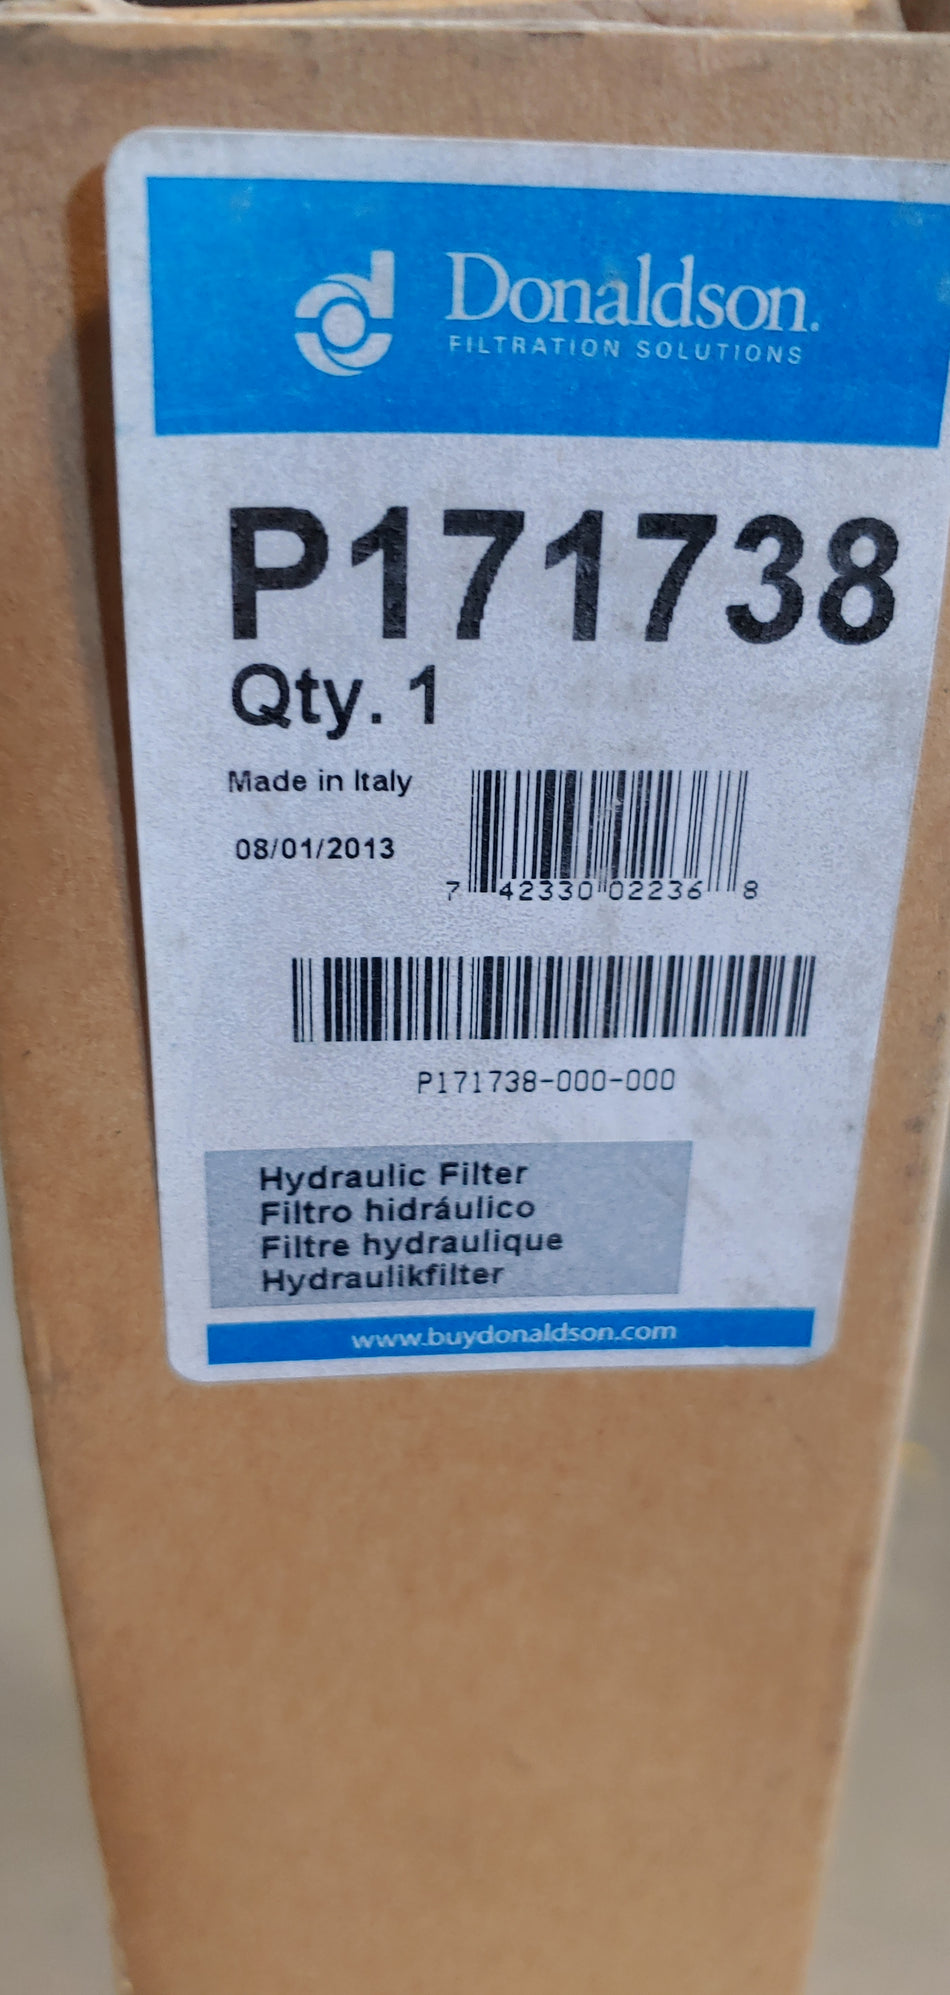 Donaldson P171738 Hydraulic Filter